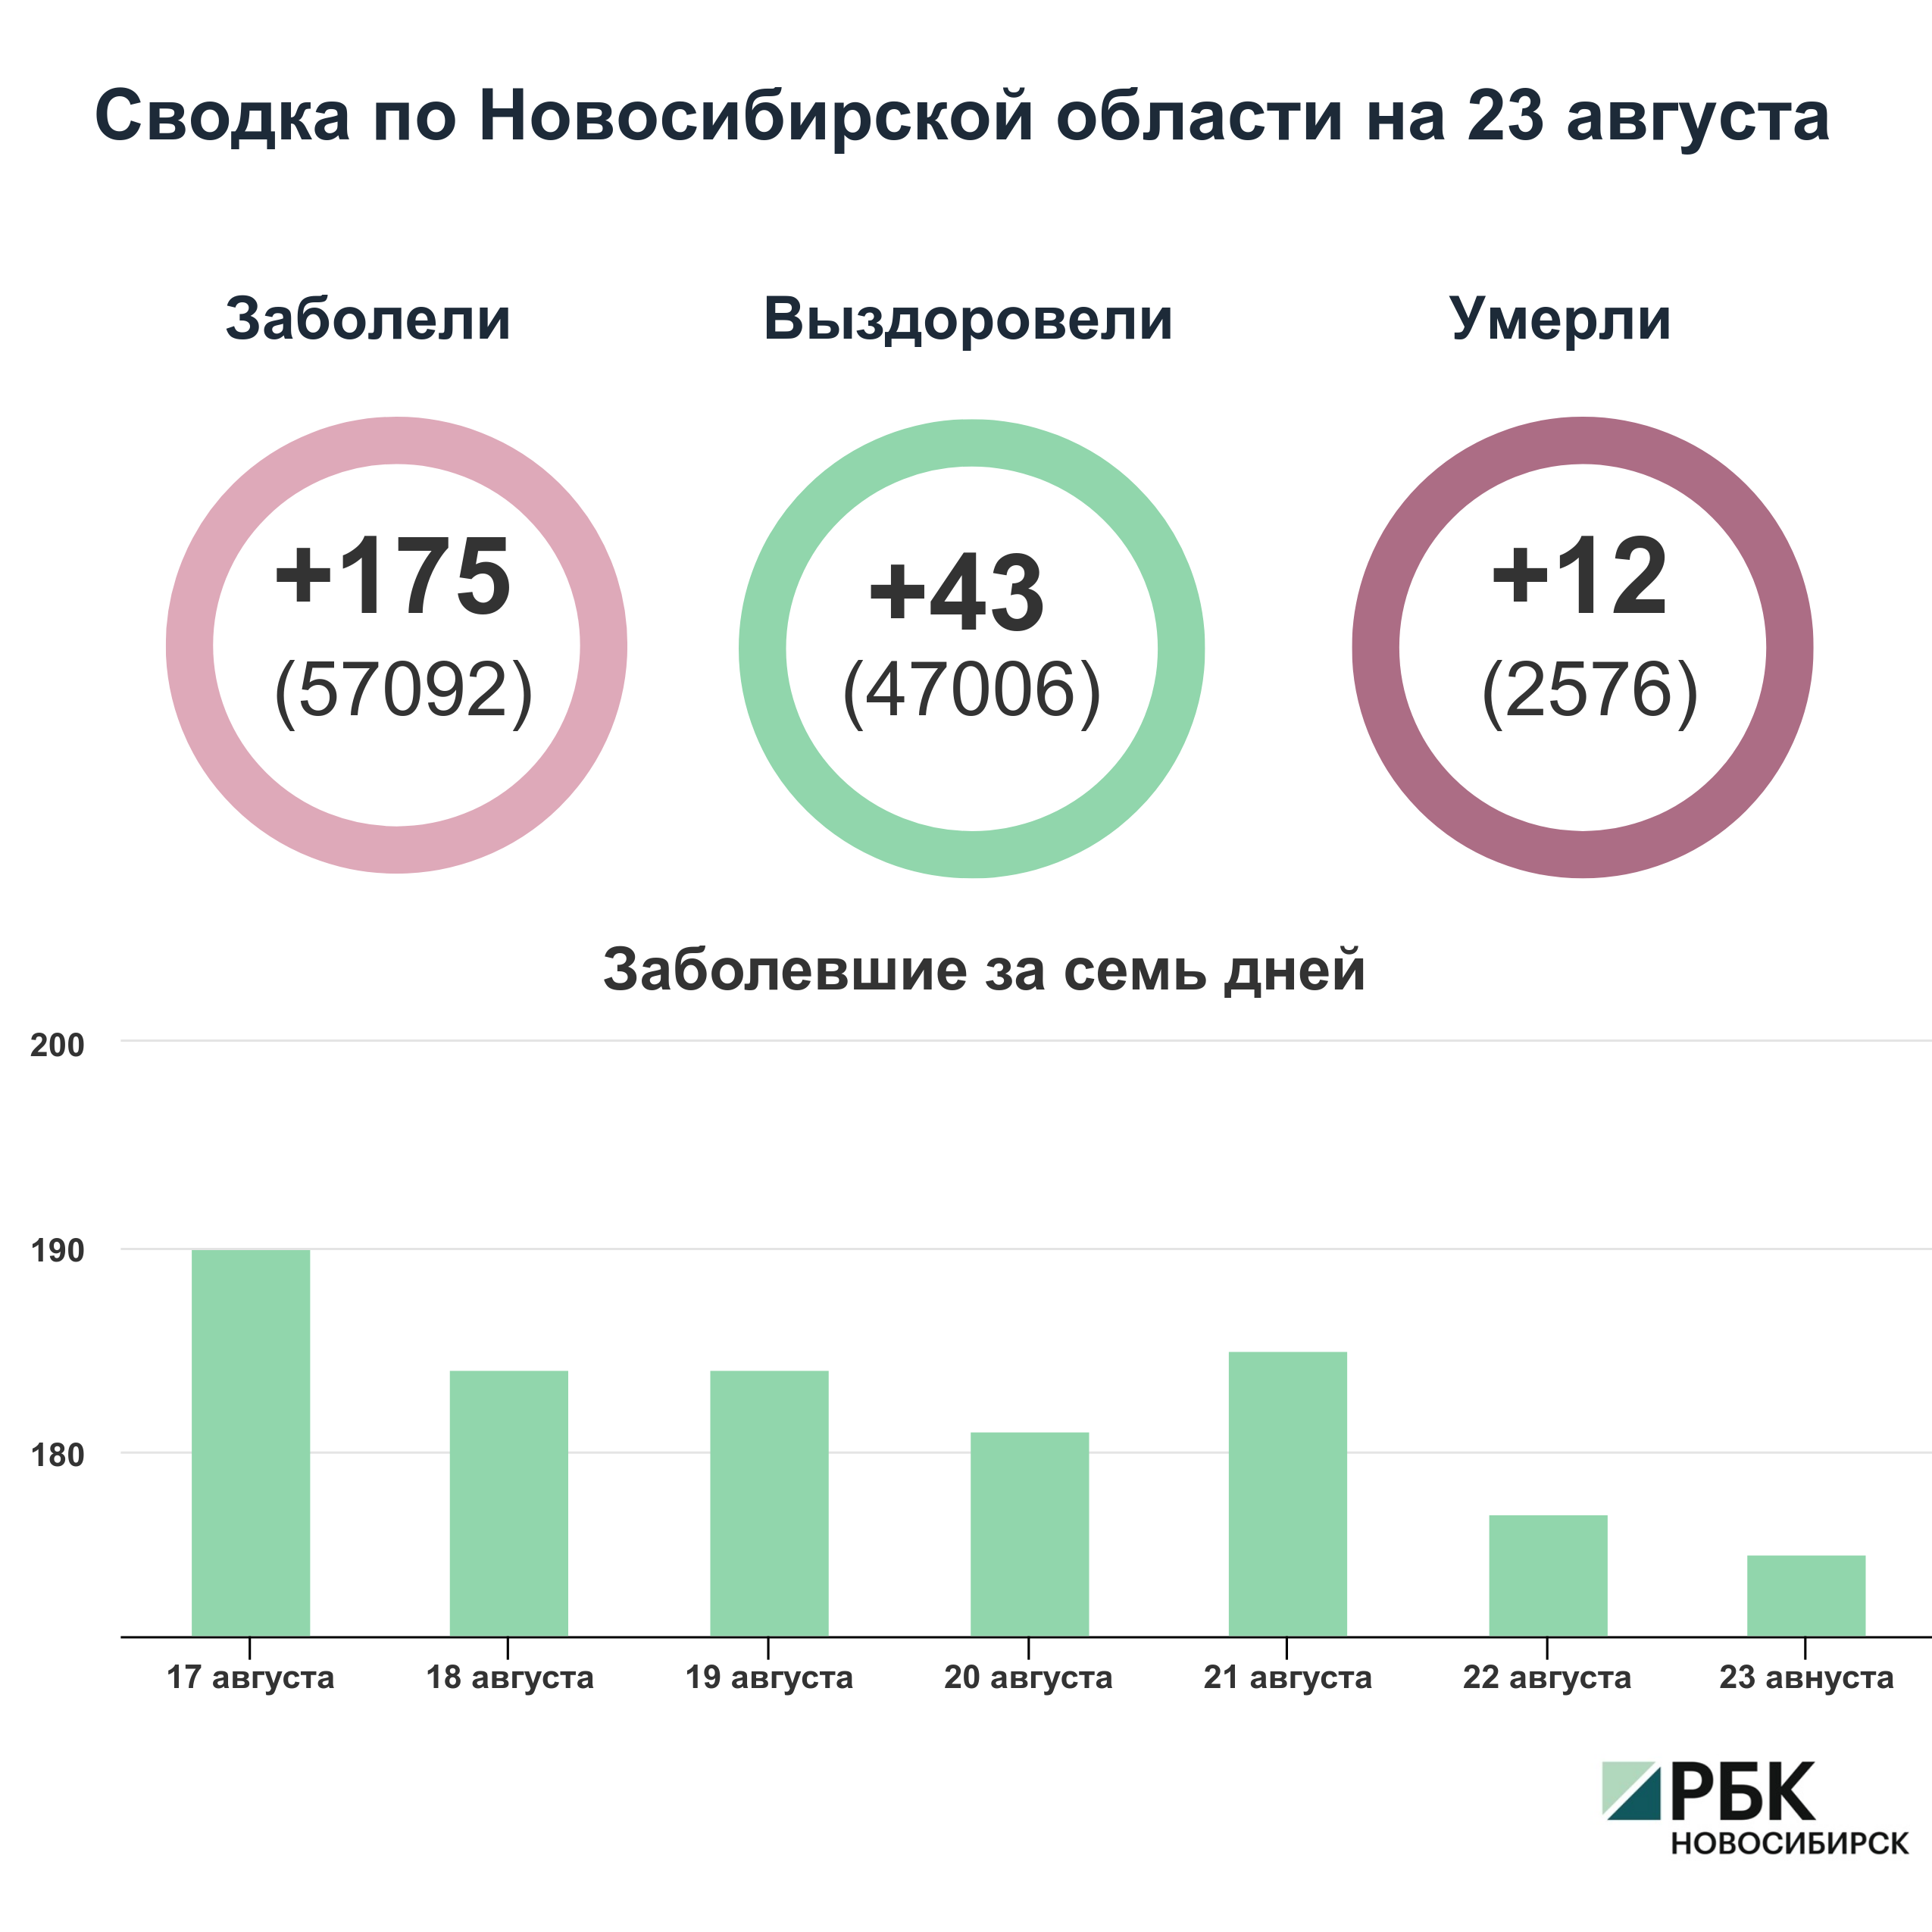 Коронавирус в Новосибирске: сводка на 23 августа